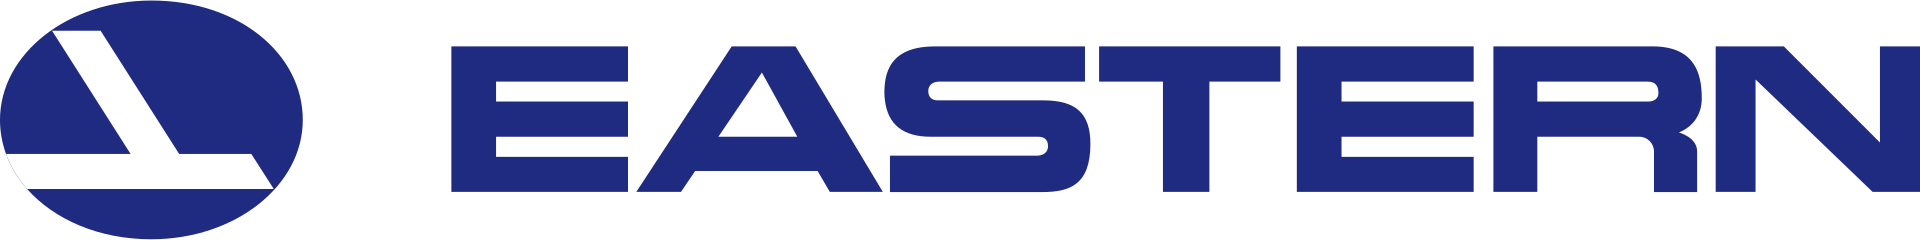 Eastern Air Lines Group Inc. logo